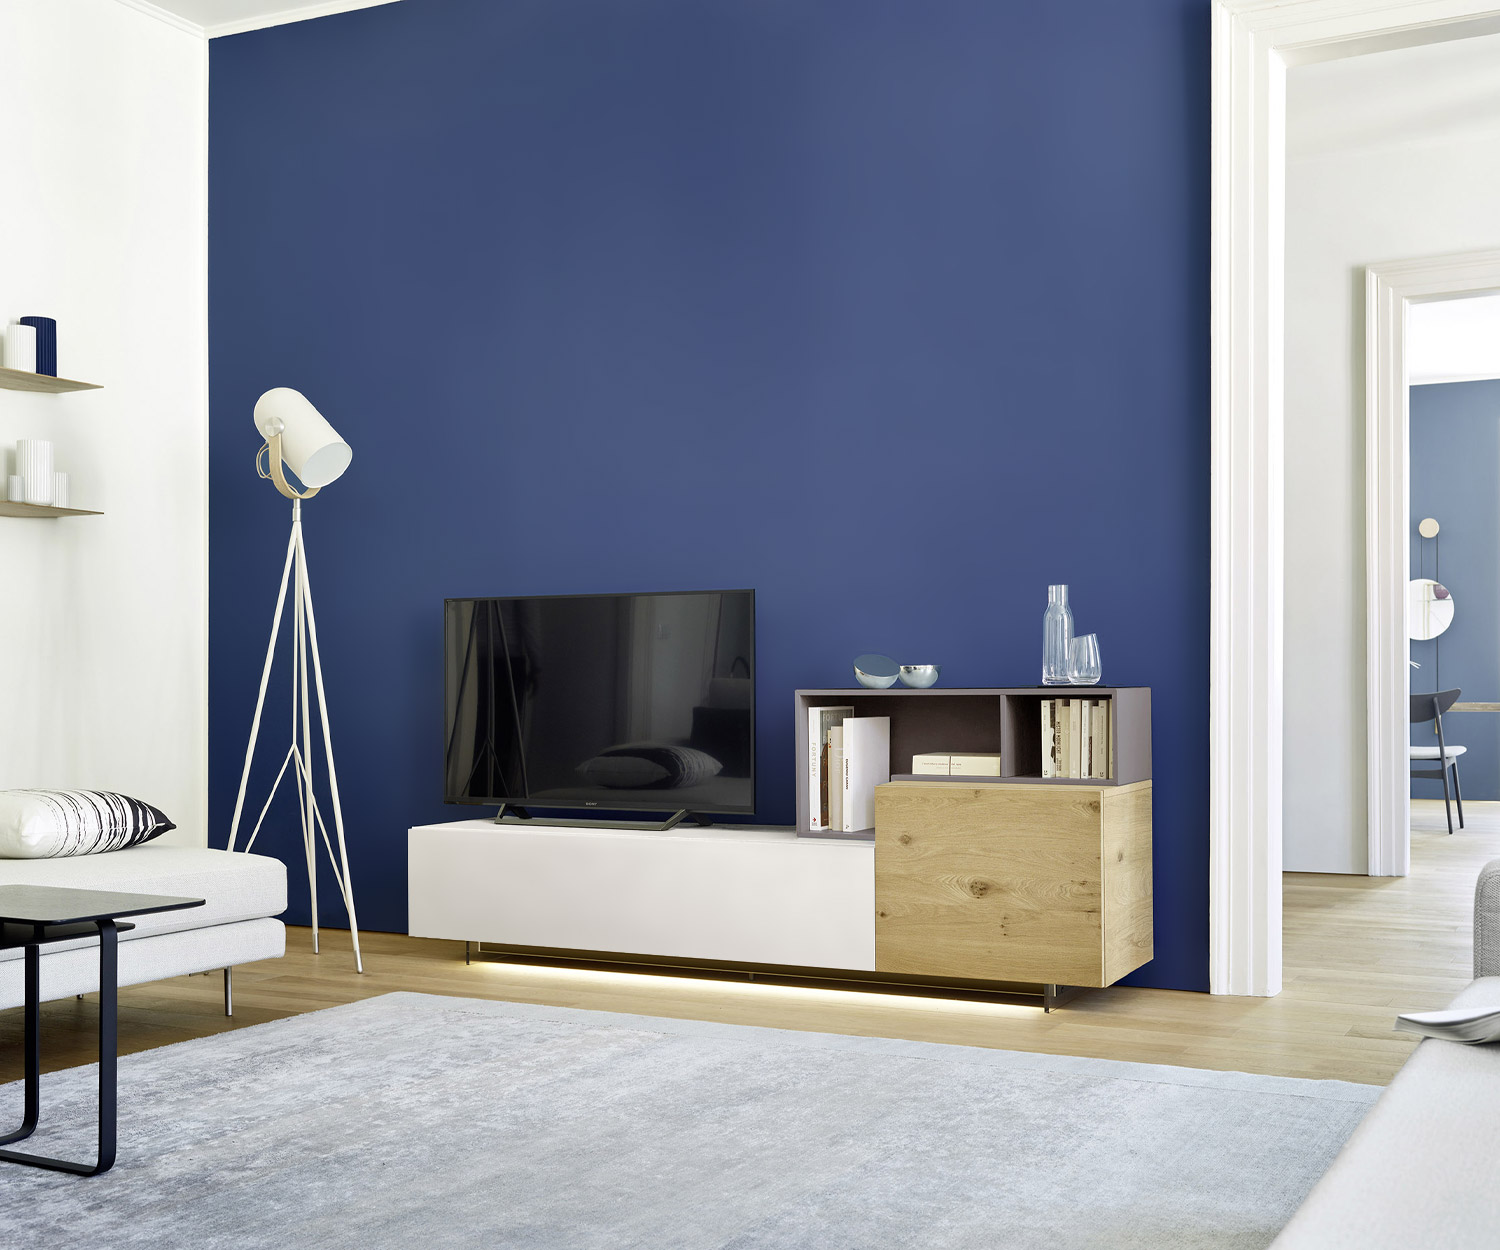 Exclusief design TV wandmeubel Livitalia C09 voor kleine woonkamers licht eiken wit mat zwevend effect